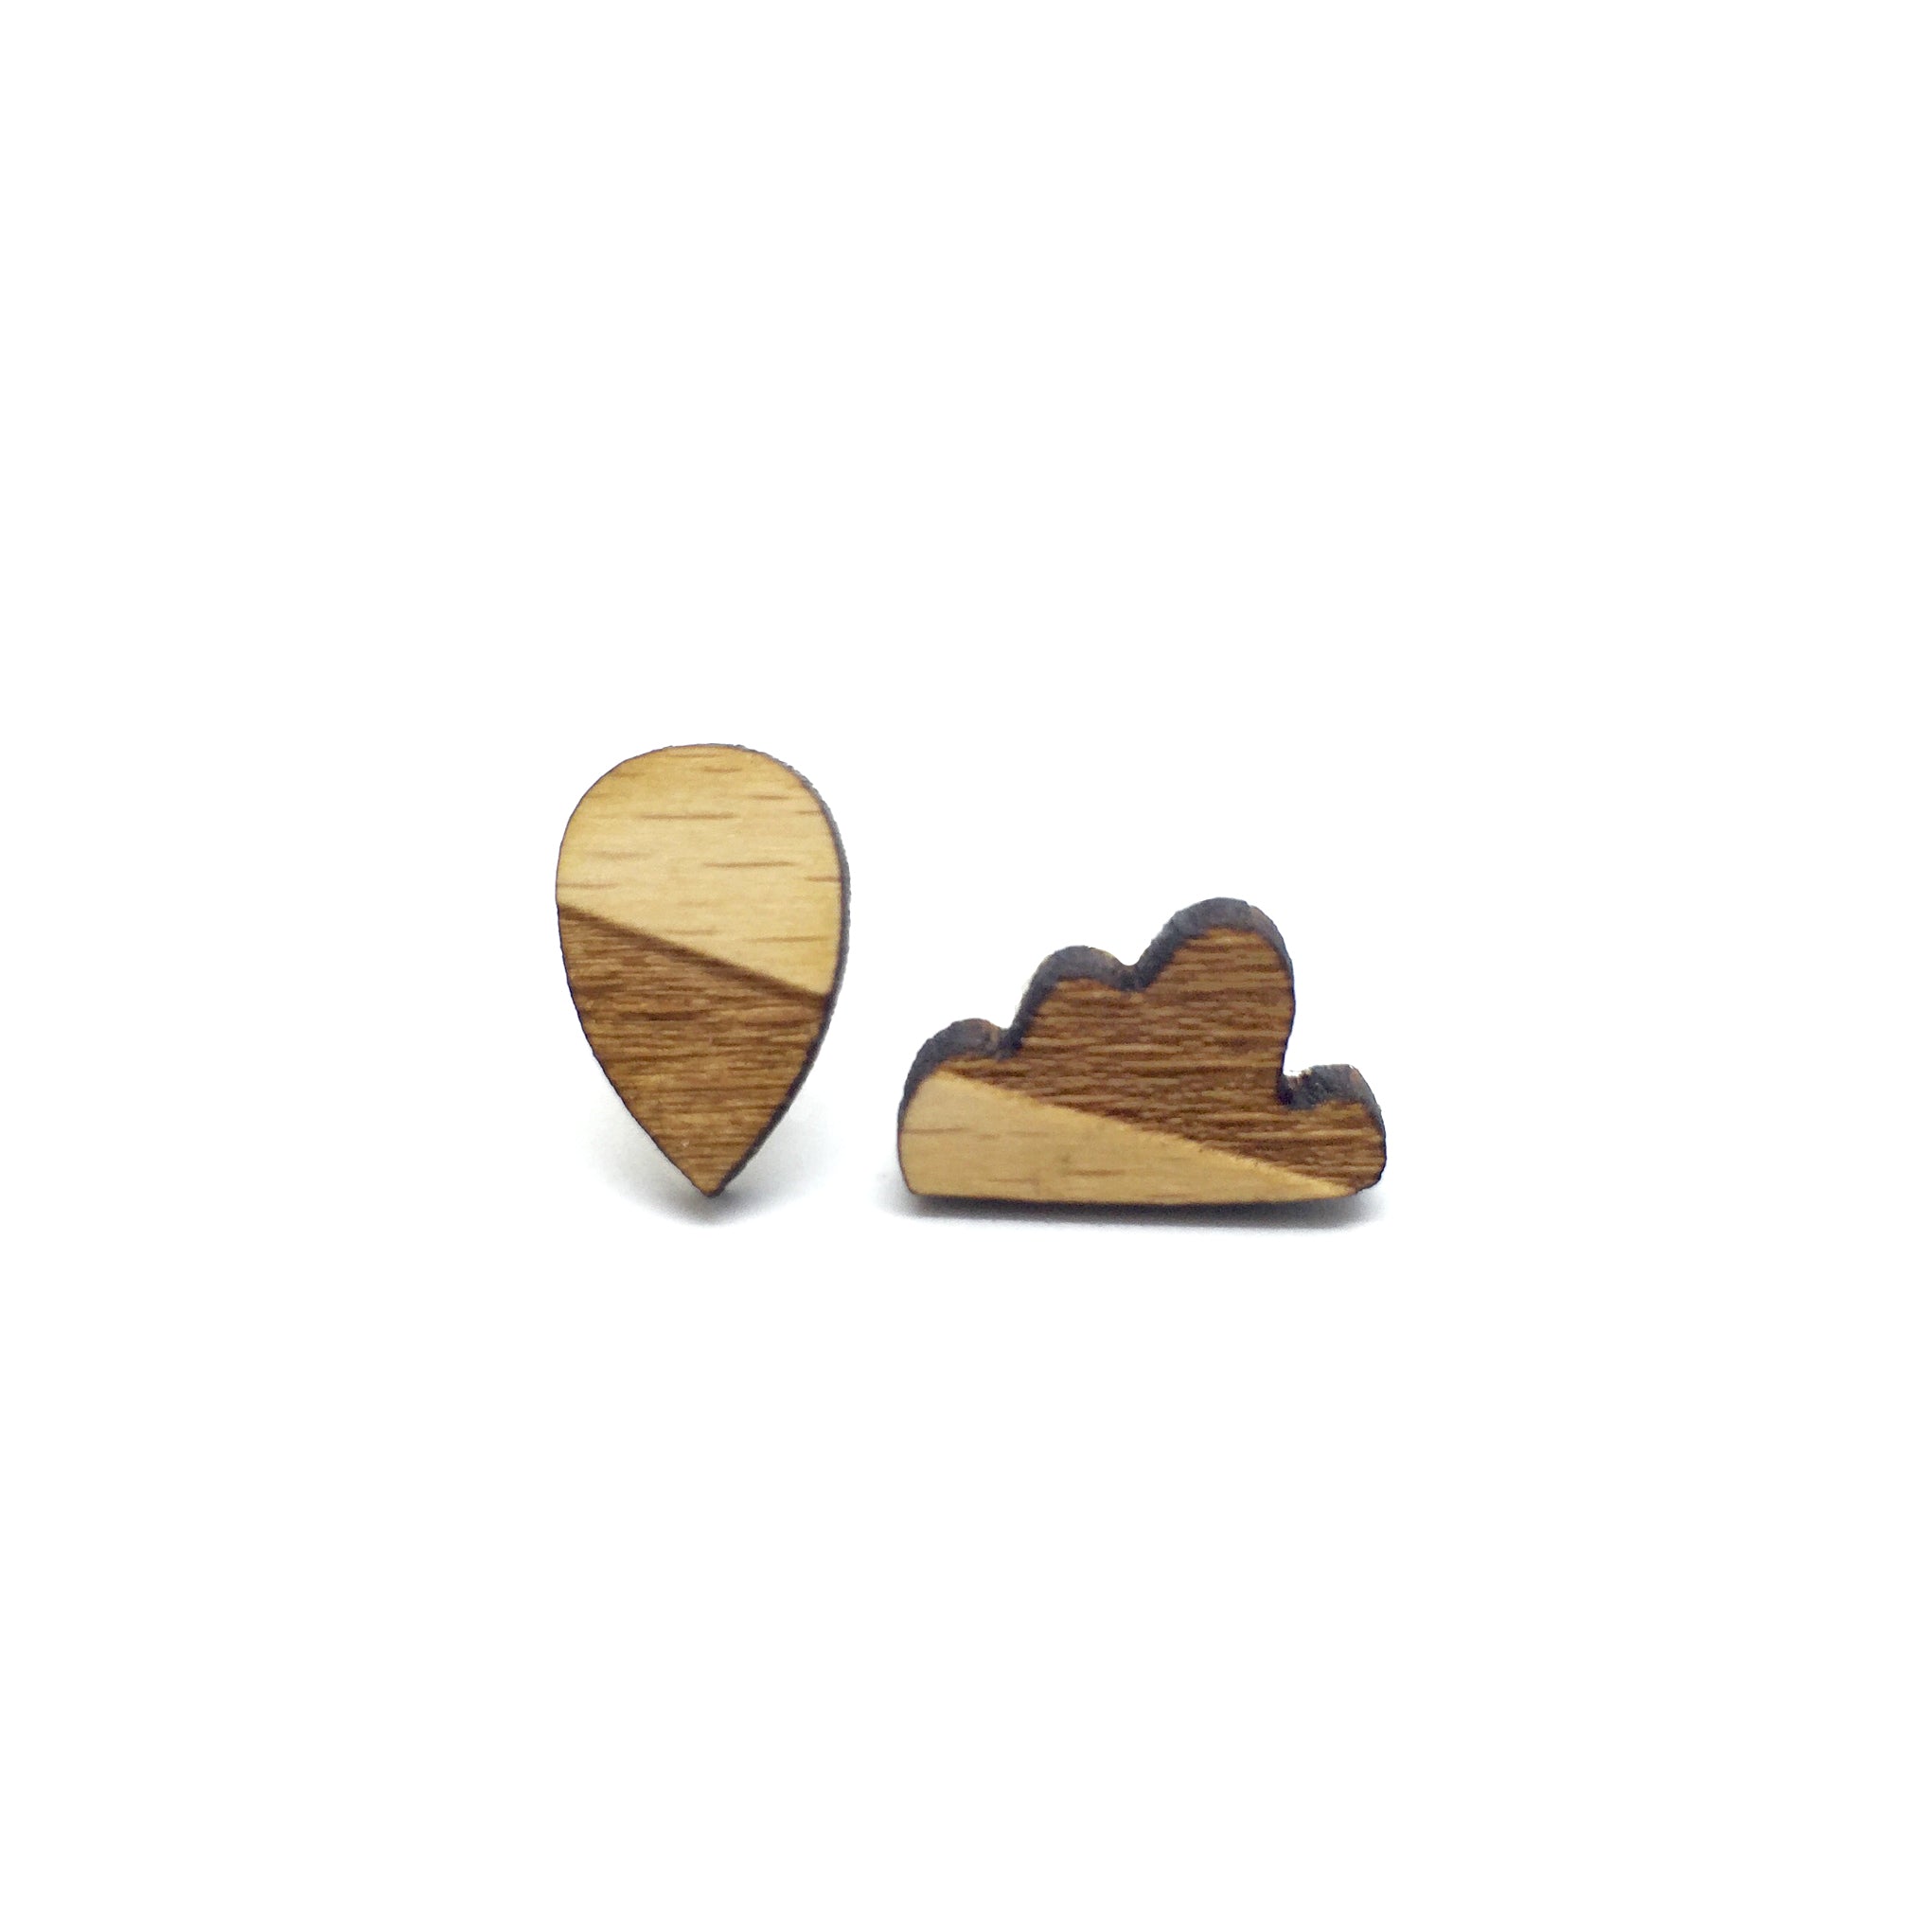 A Rainy Day Laser Cut Wood Earrings - LM